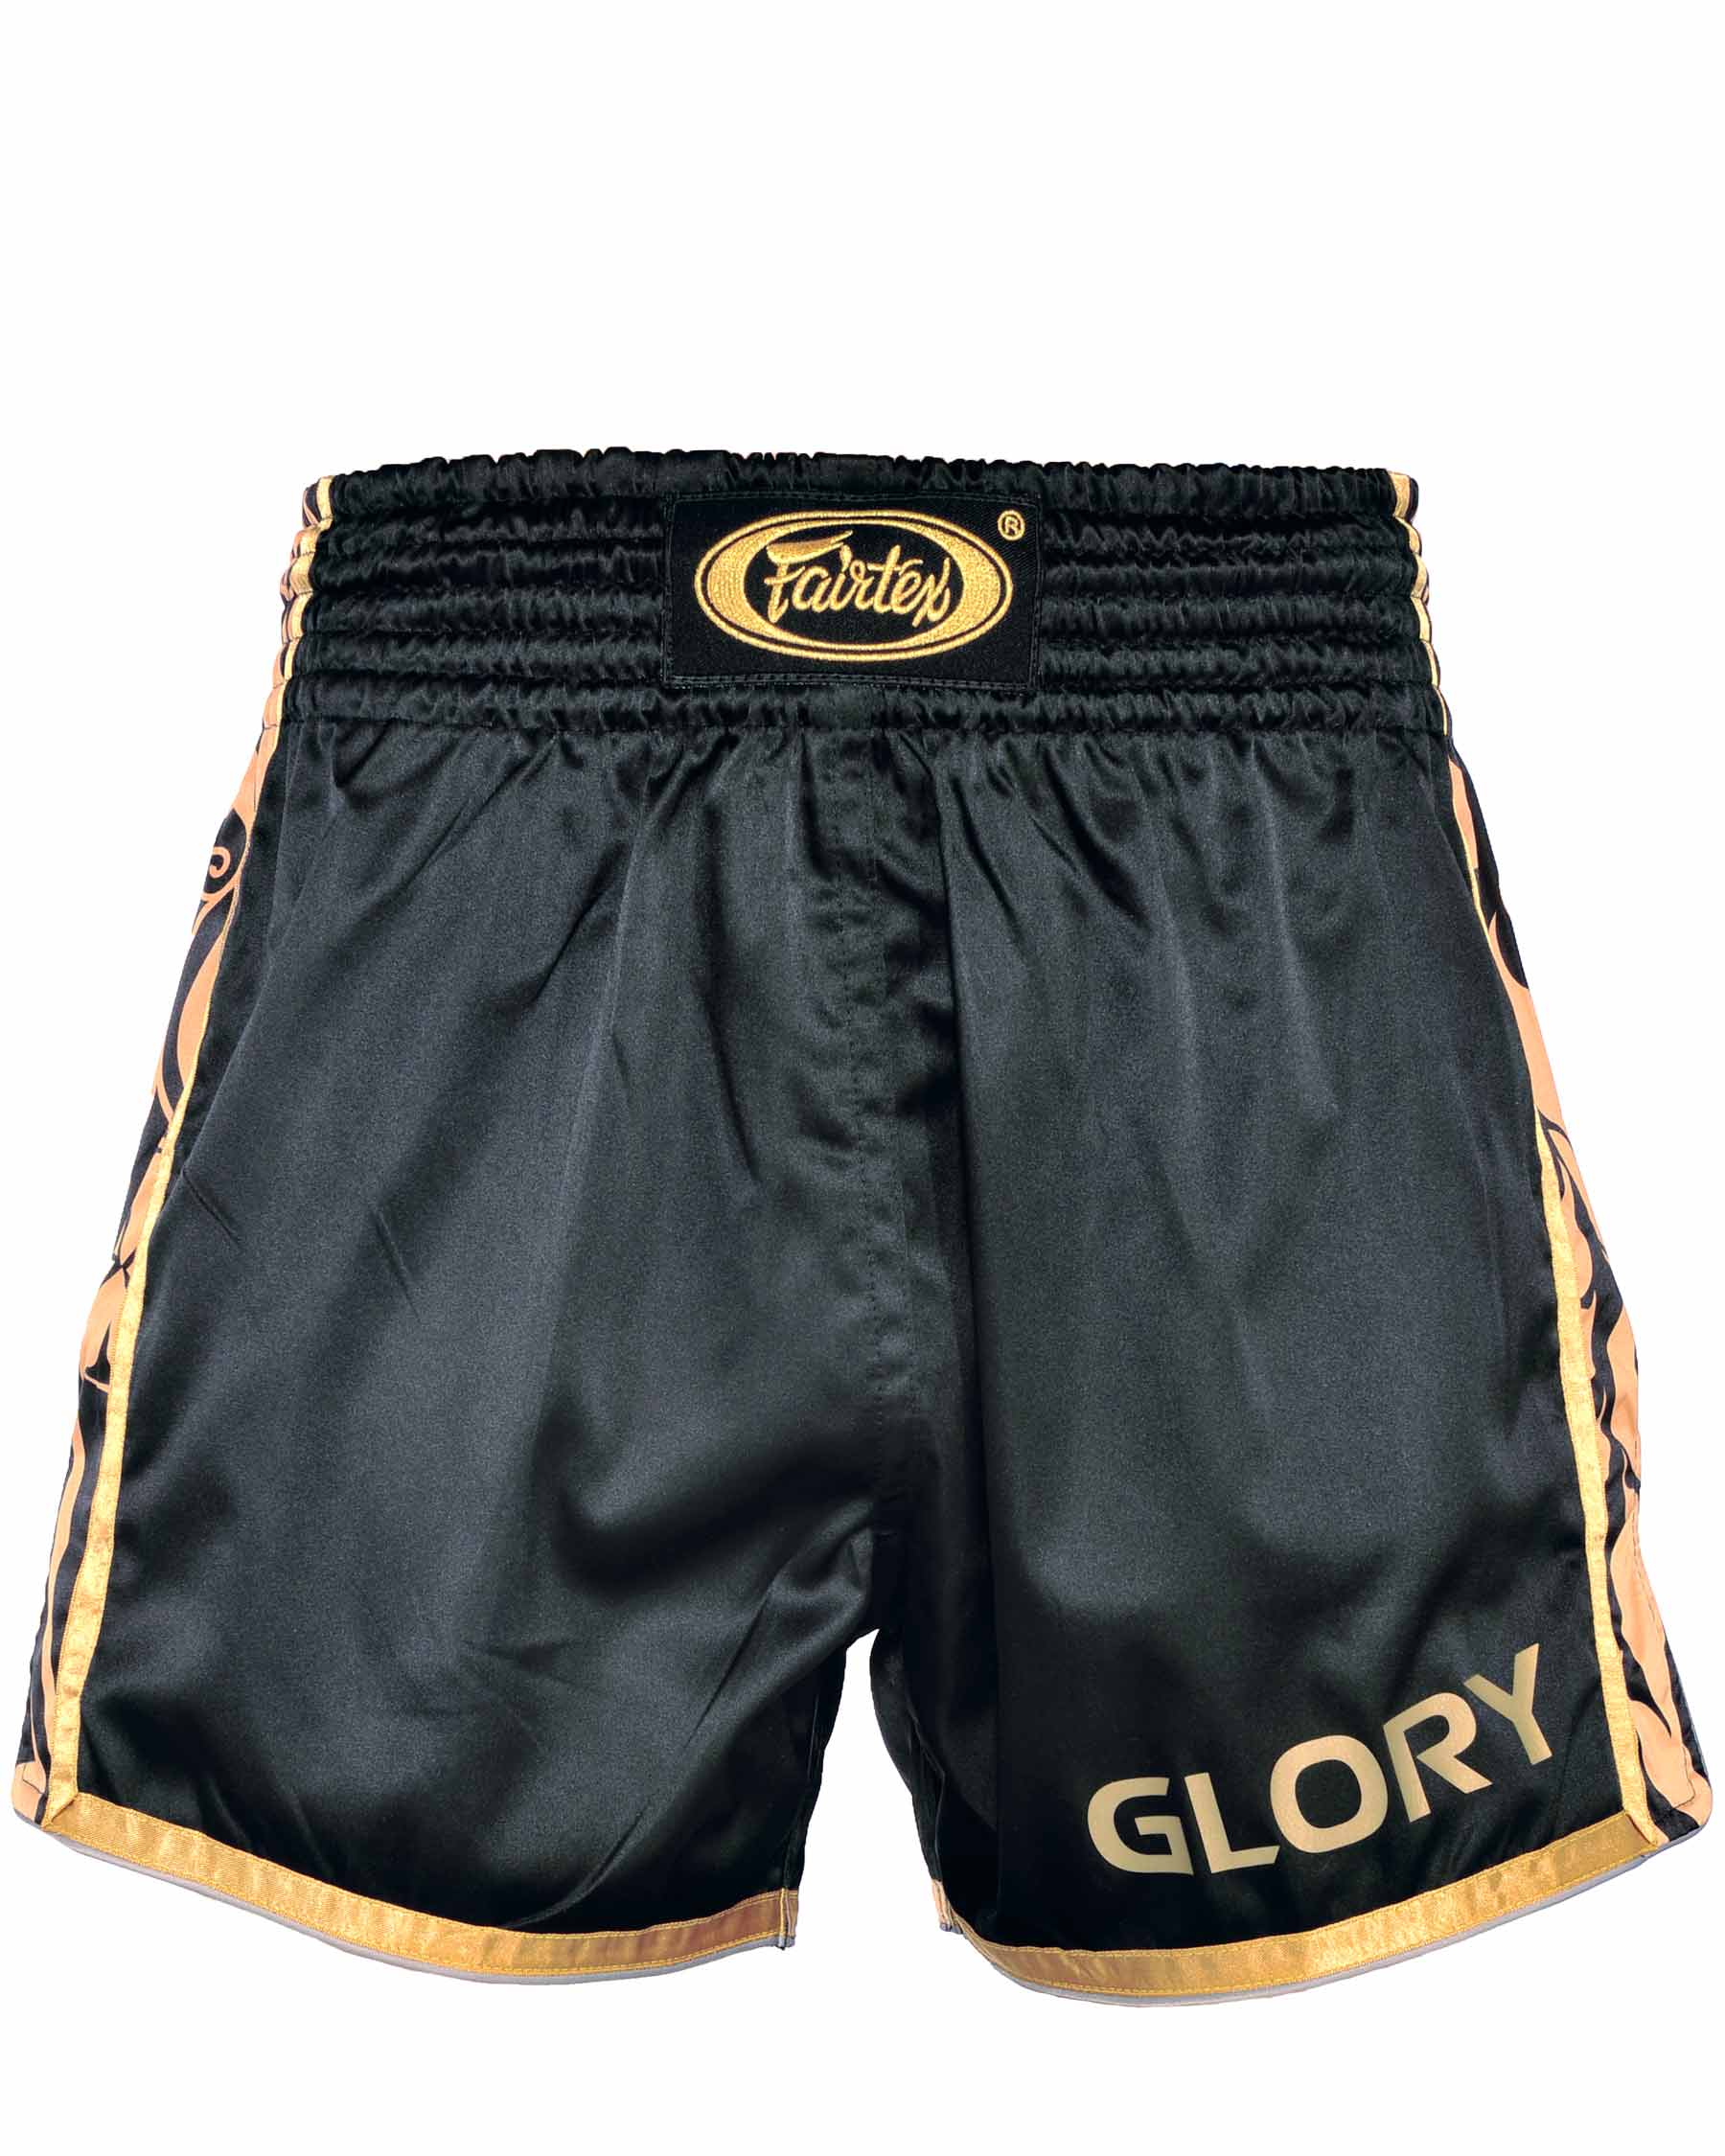 Fairtex - Glory BSG1 Thaiboxhose in schwarz/gold